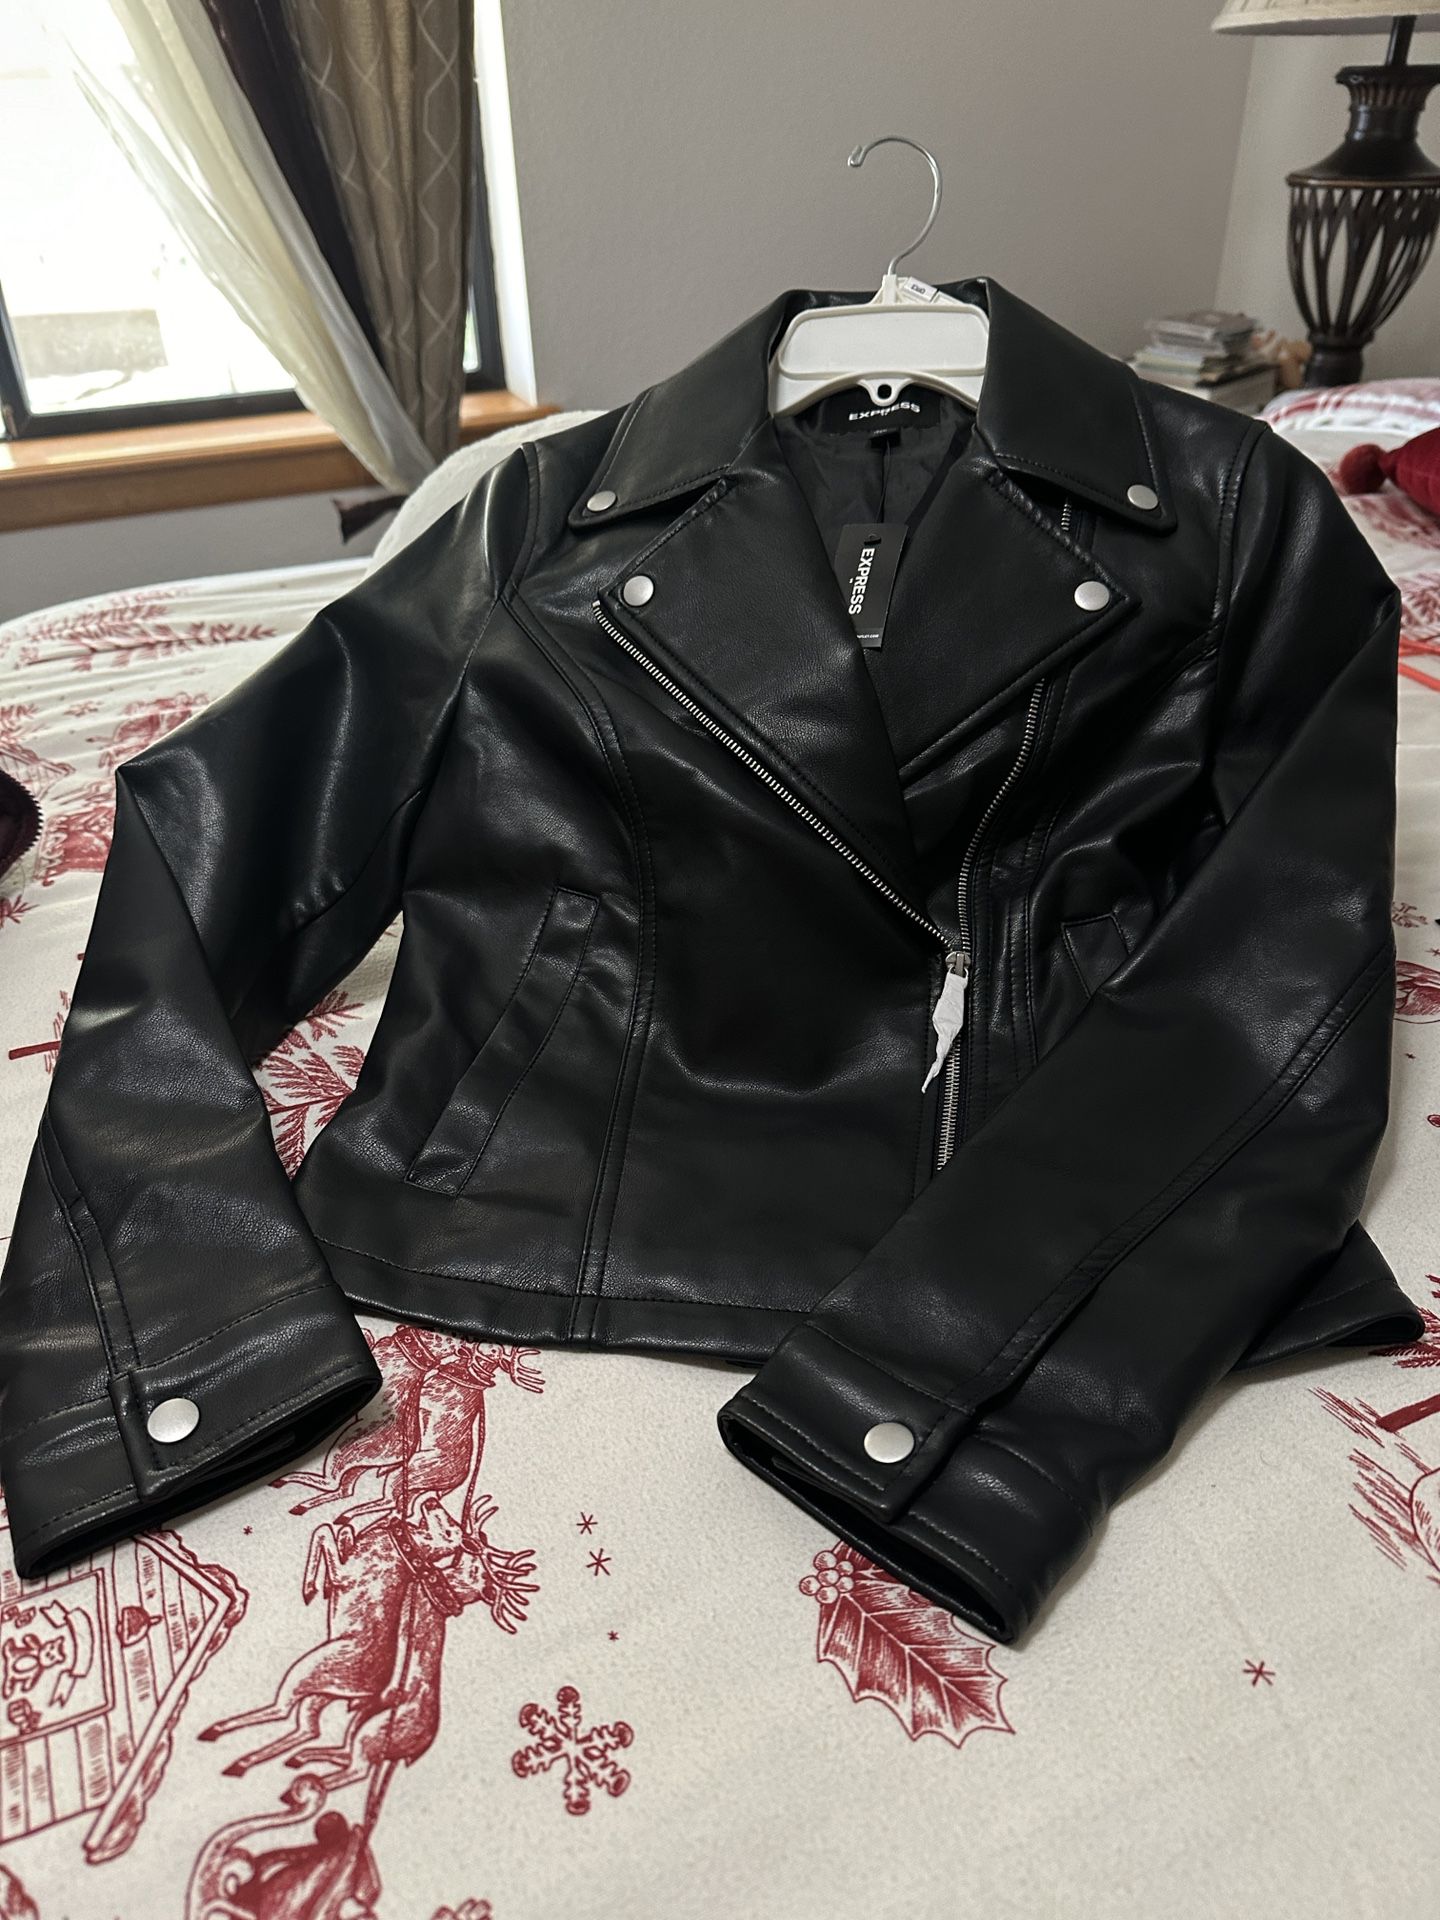 Black Leather Jacket  Xpress Size Xsmall 